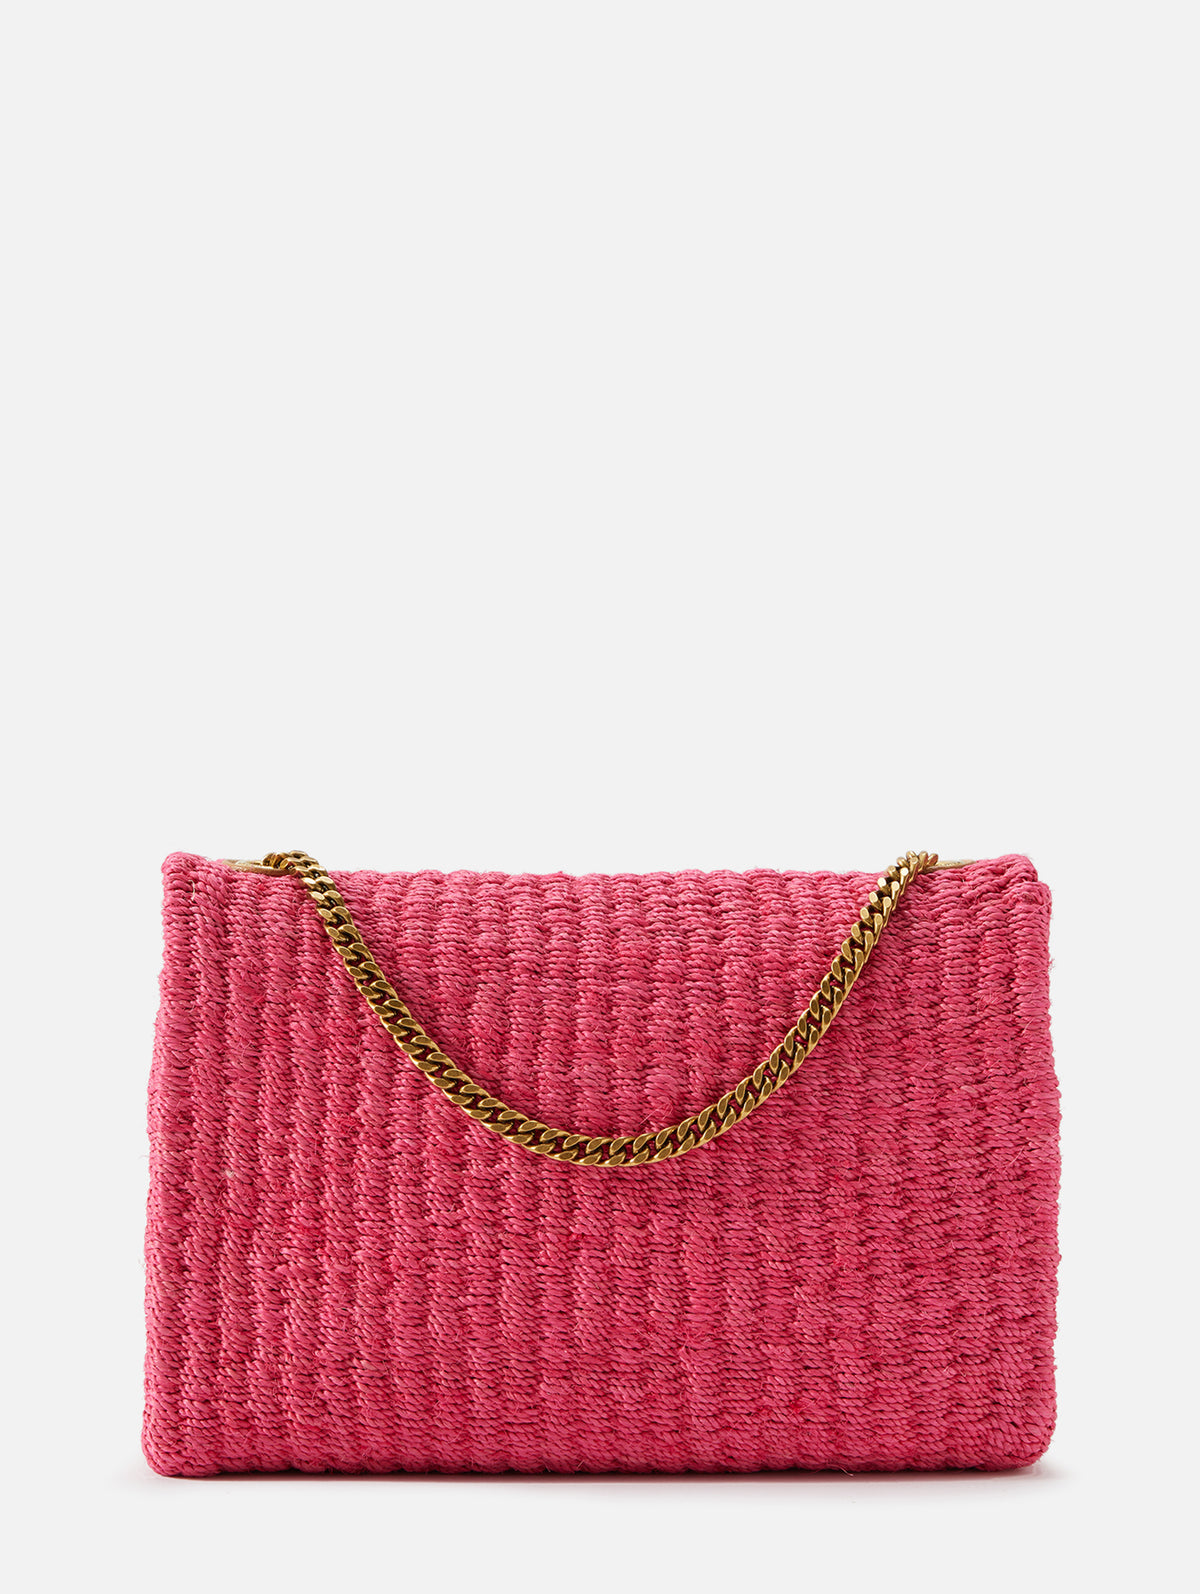 Saint Laurent Medium Niki Raffia Chain Bag in Bright Pink